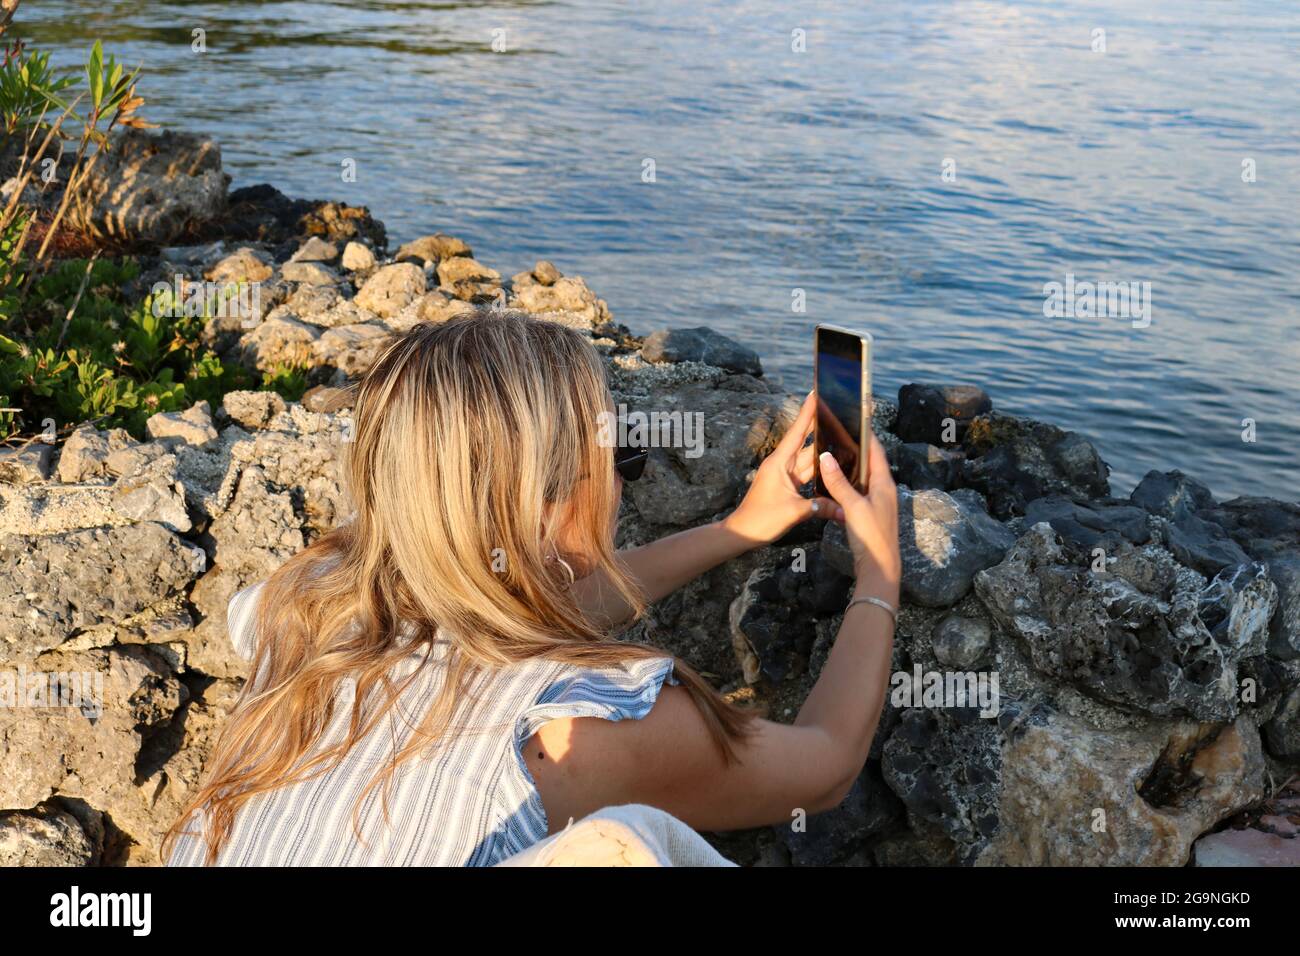 Woman using phone Stock Photo